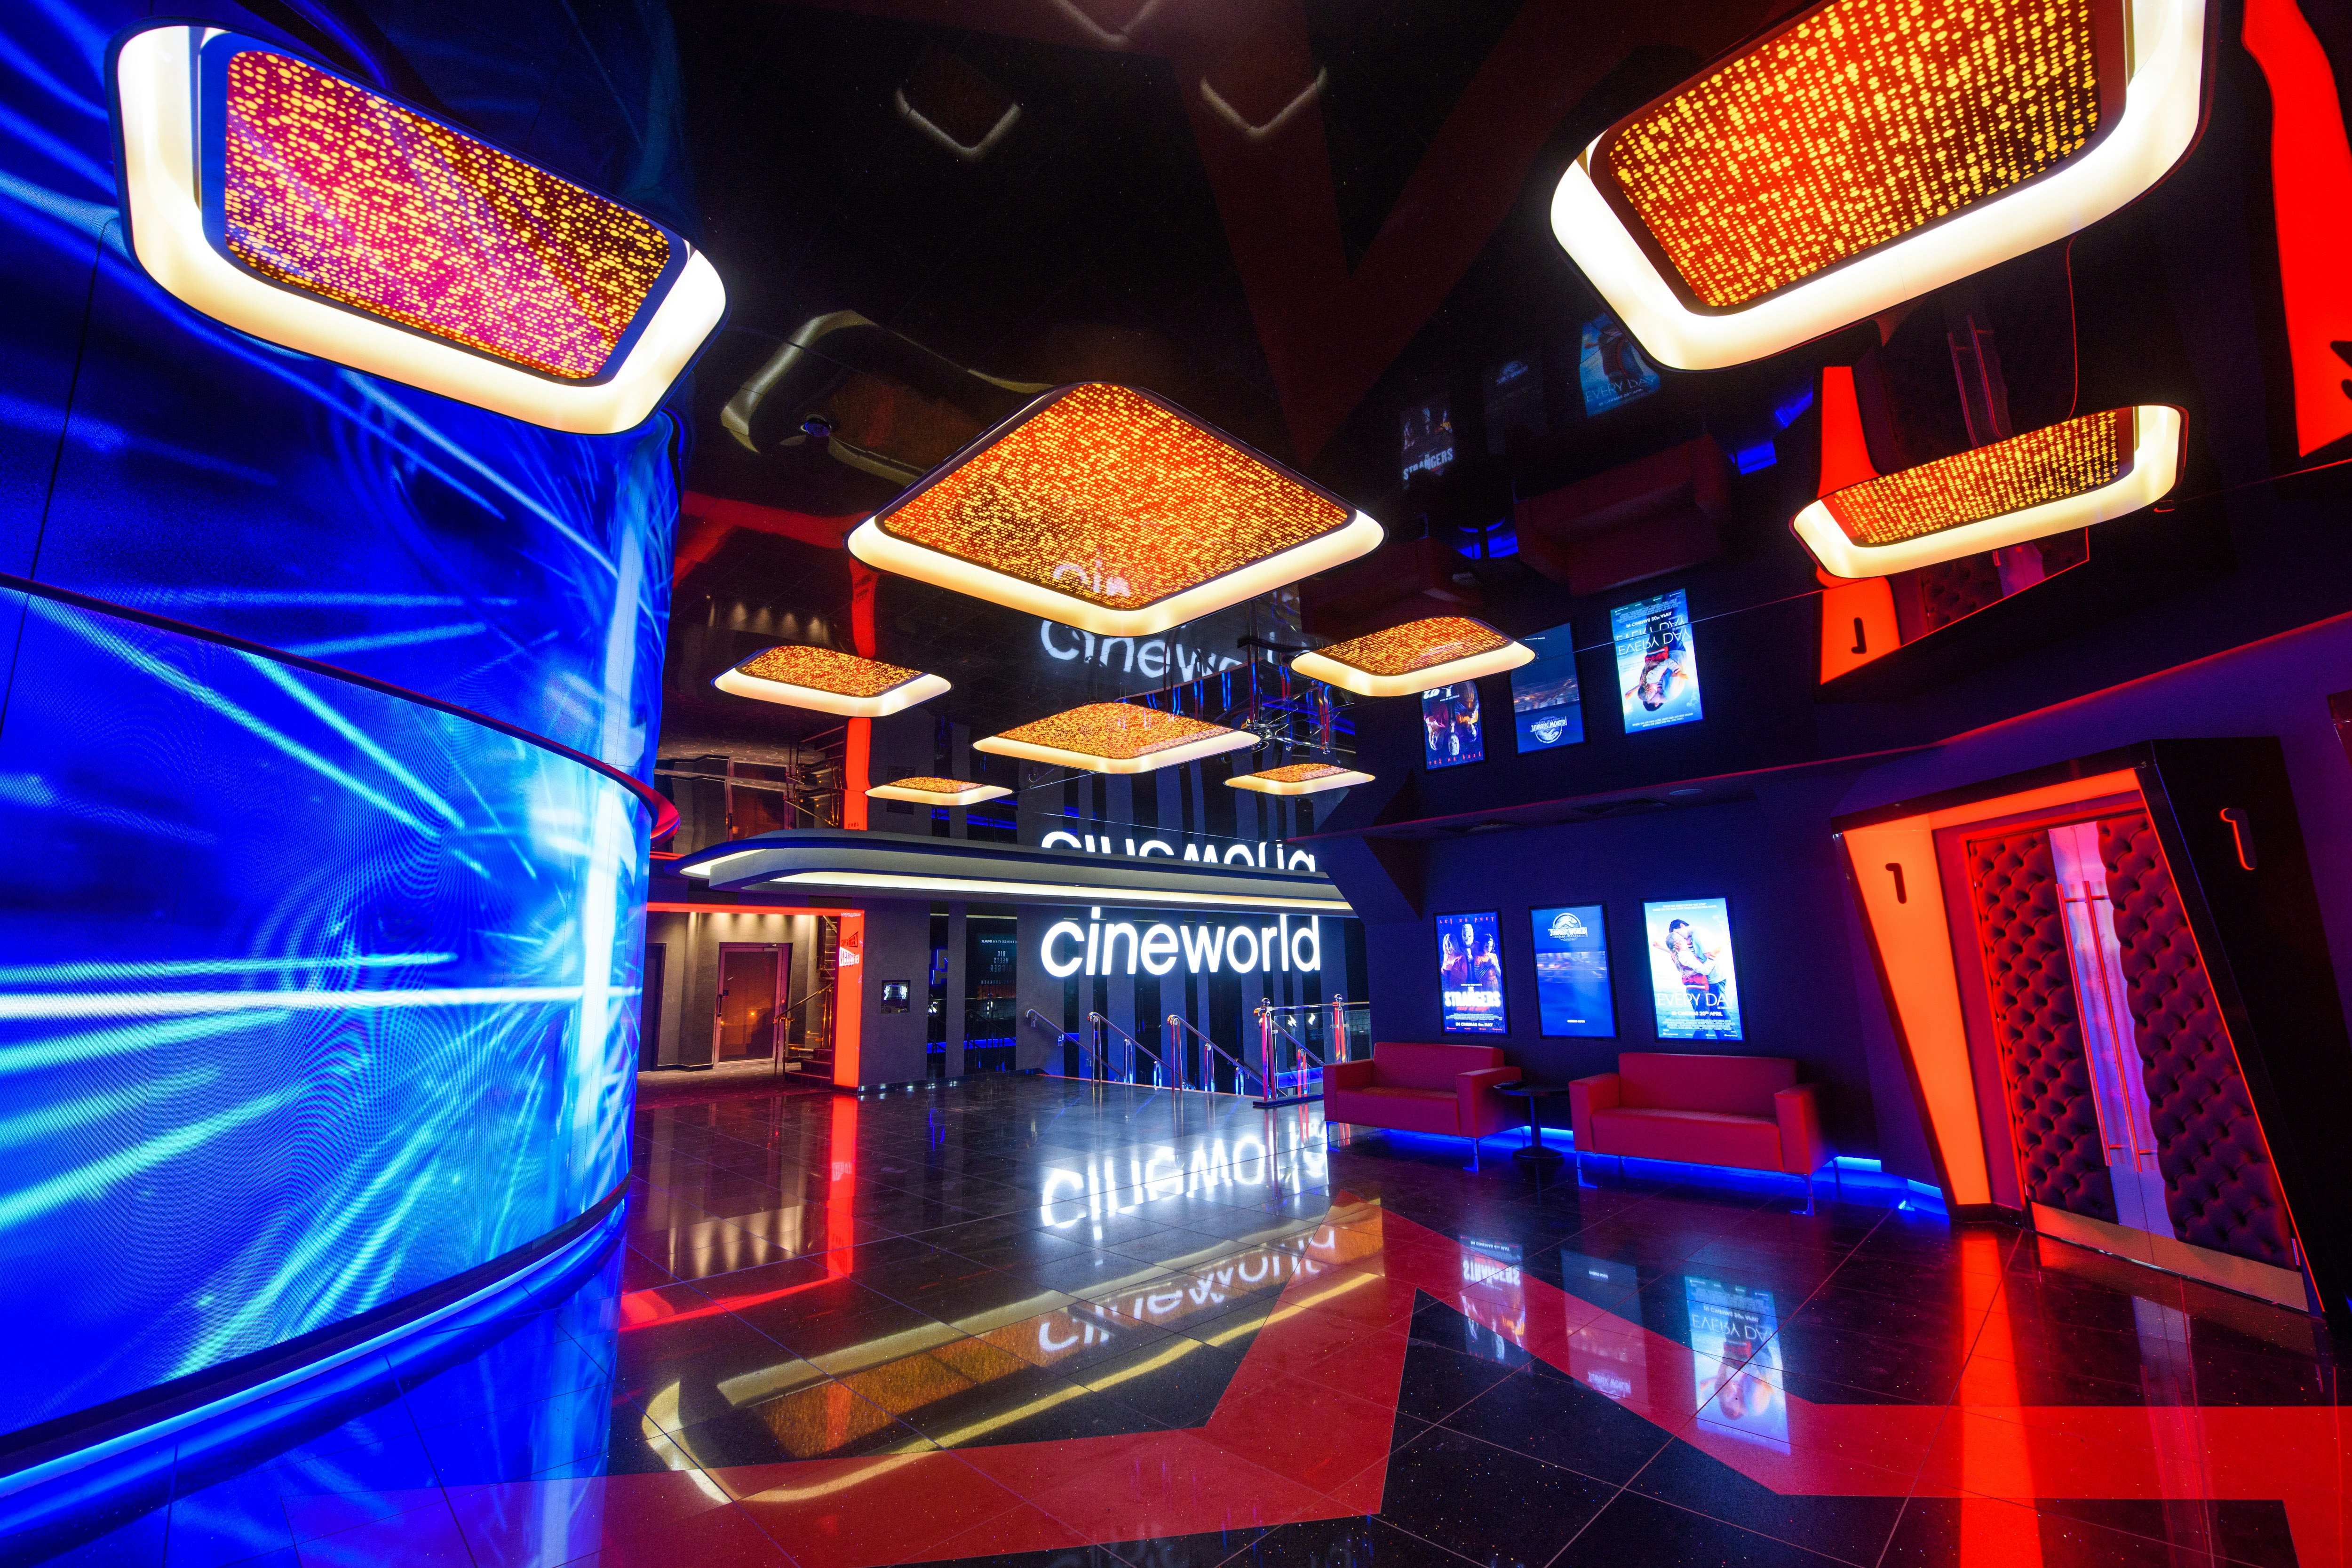 Cineworld Leicester Square - IMAX image 2